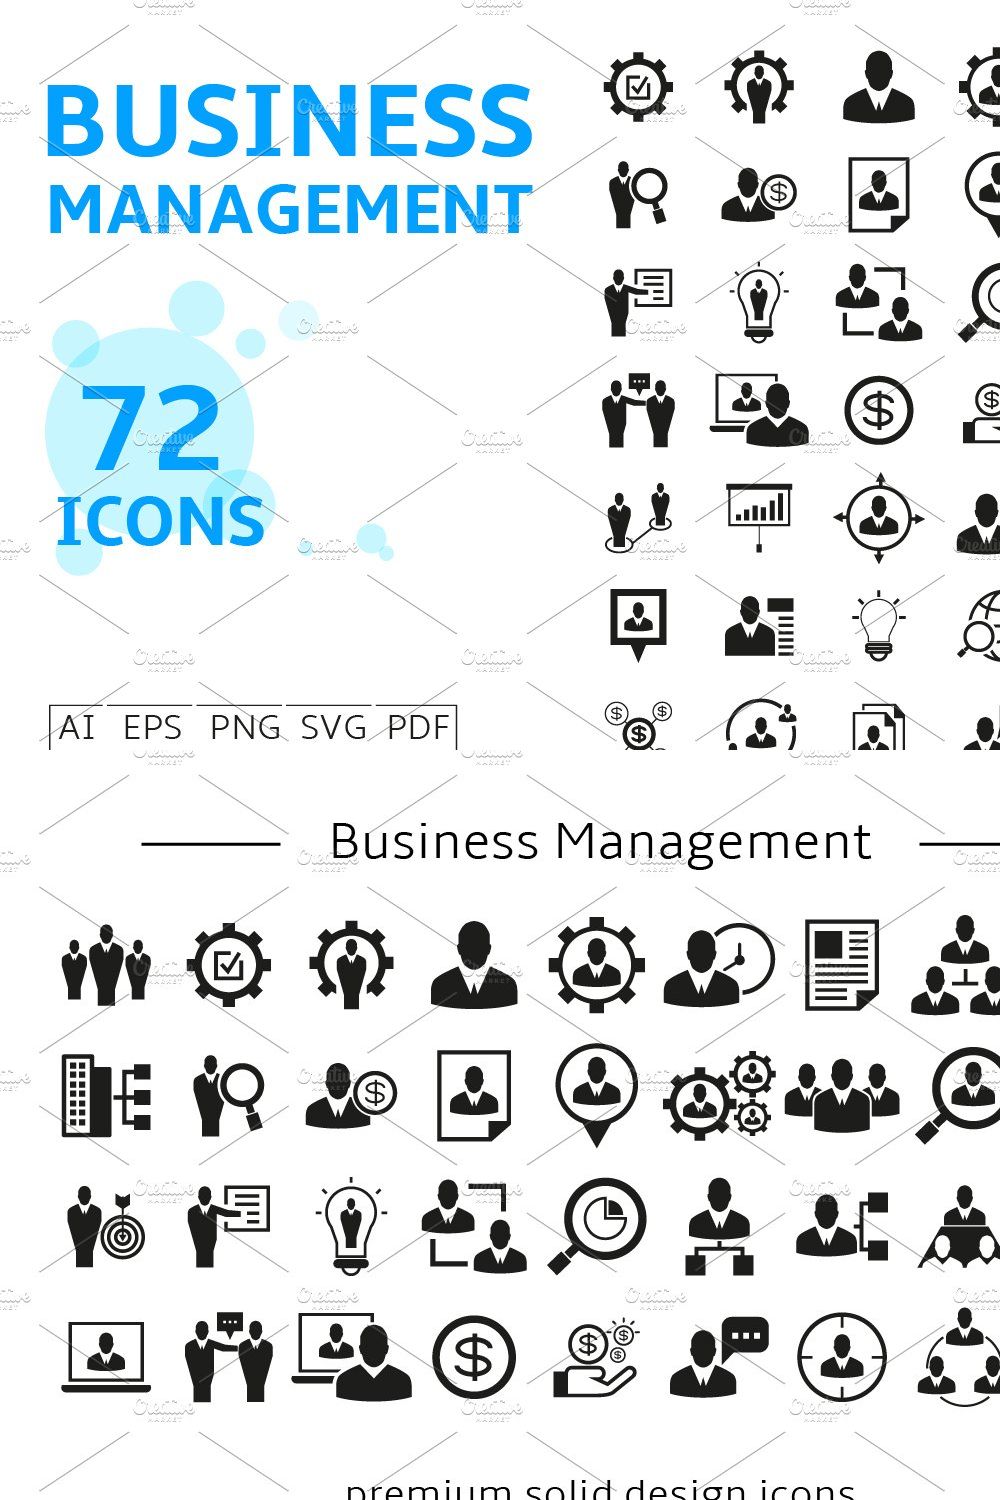 Business Management Icons Set pinterest preview image.